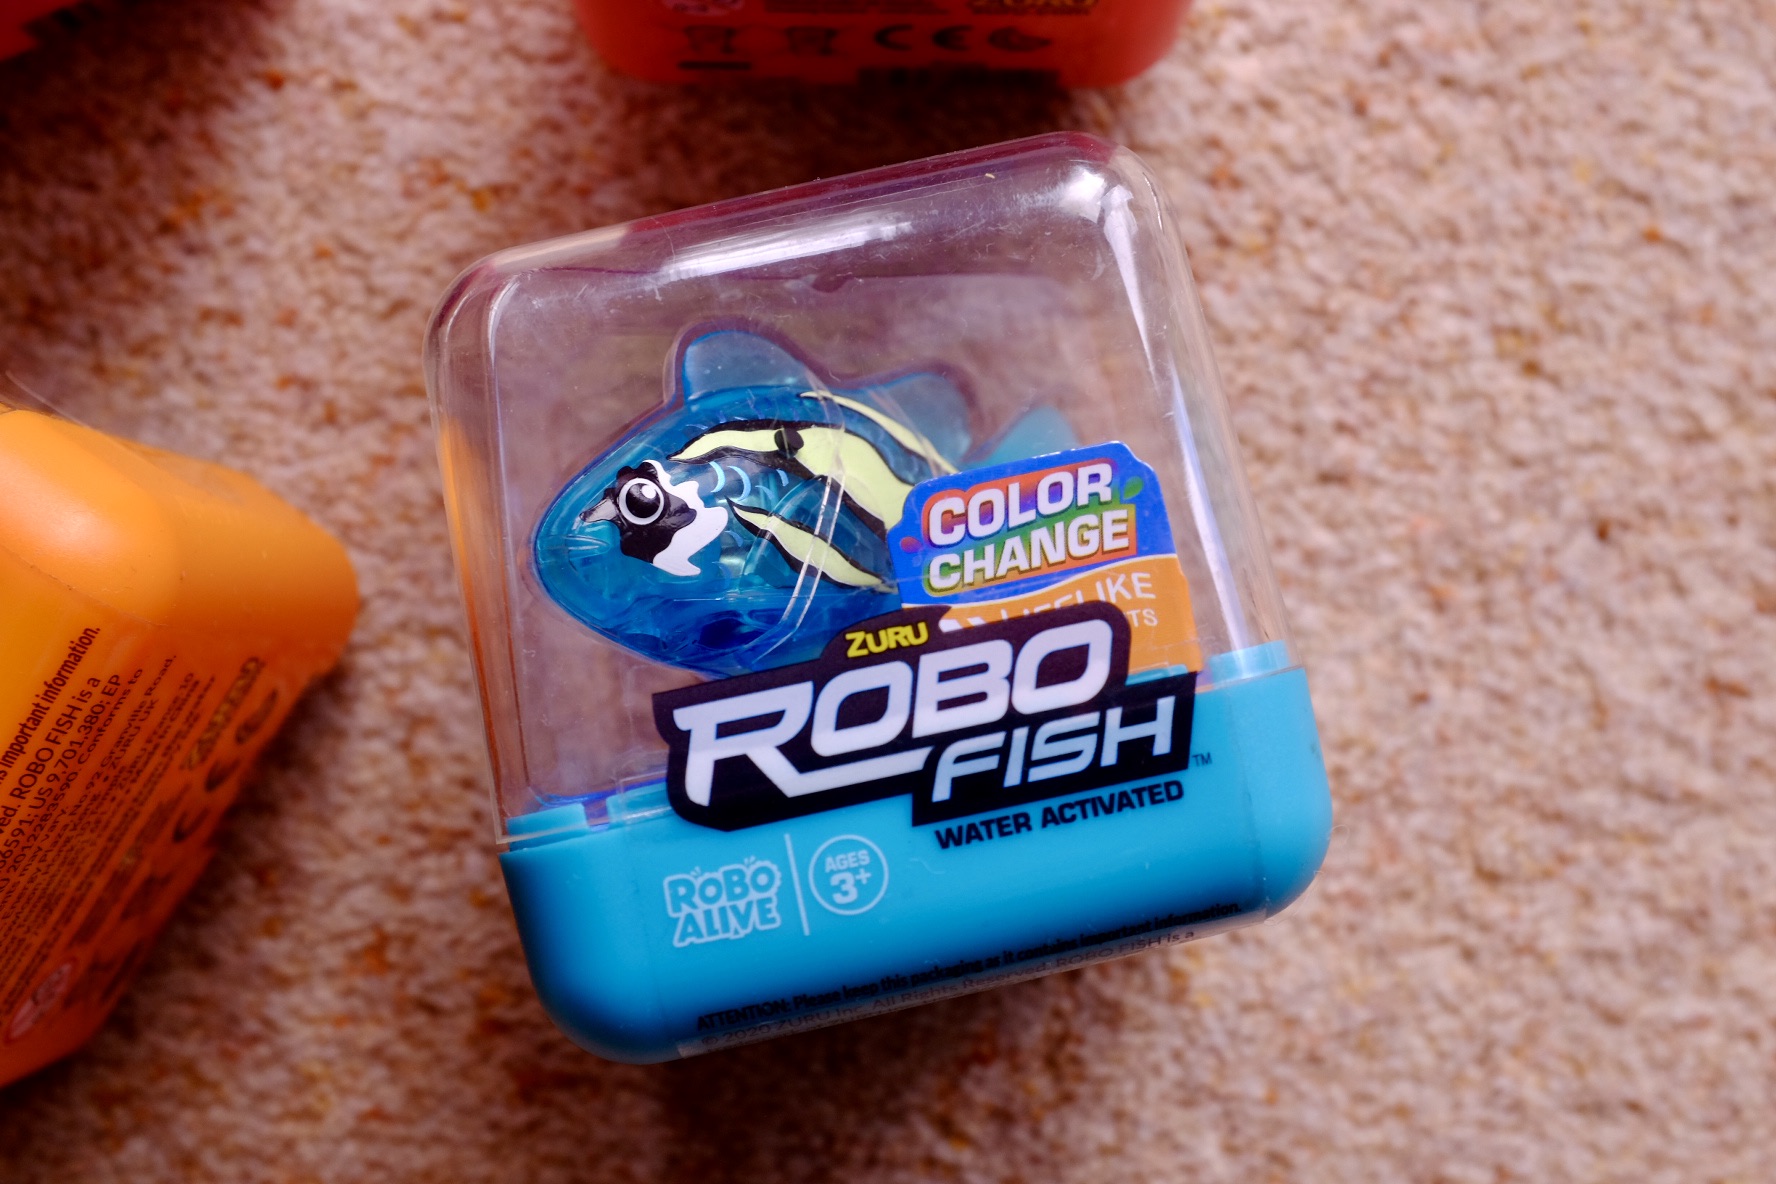 Zuru Robo Alive Robo Fish Changes Color Robotic Swimming Fish